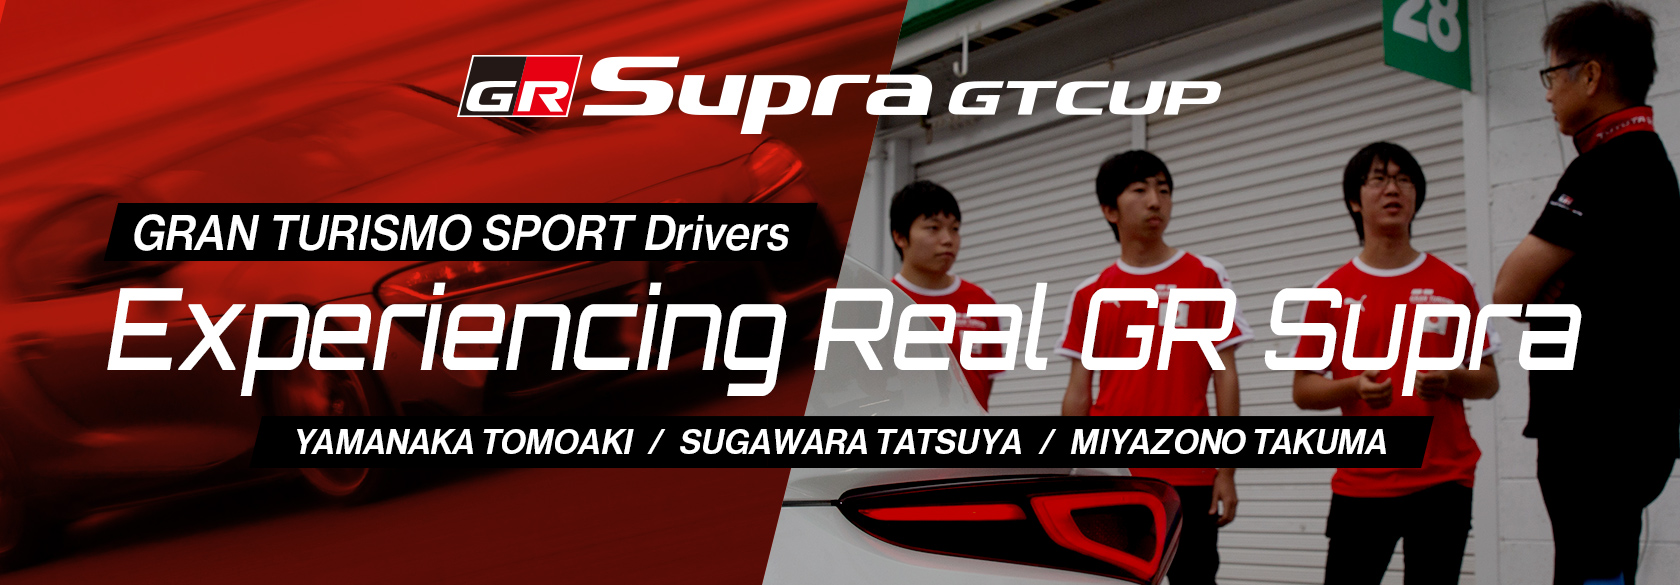 GR Supra GTCUP GRAN TURISMO SPORT Drivers Experiencing Real GR Supra YAMANAKA TOMOAKI / SUGAWARA TATSUYA / MIYAZONO TAKUMA